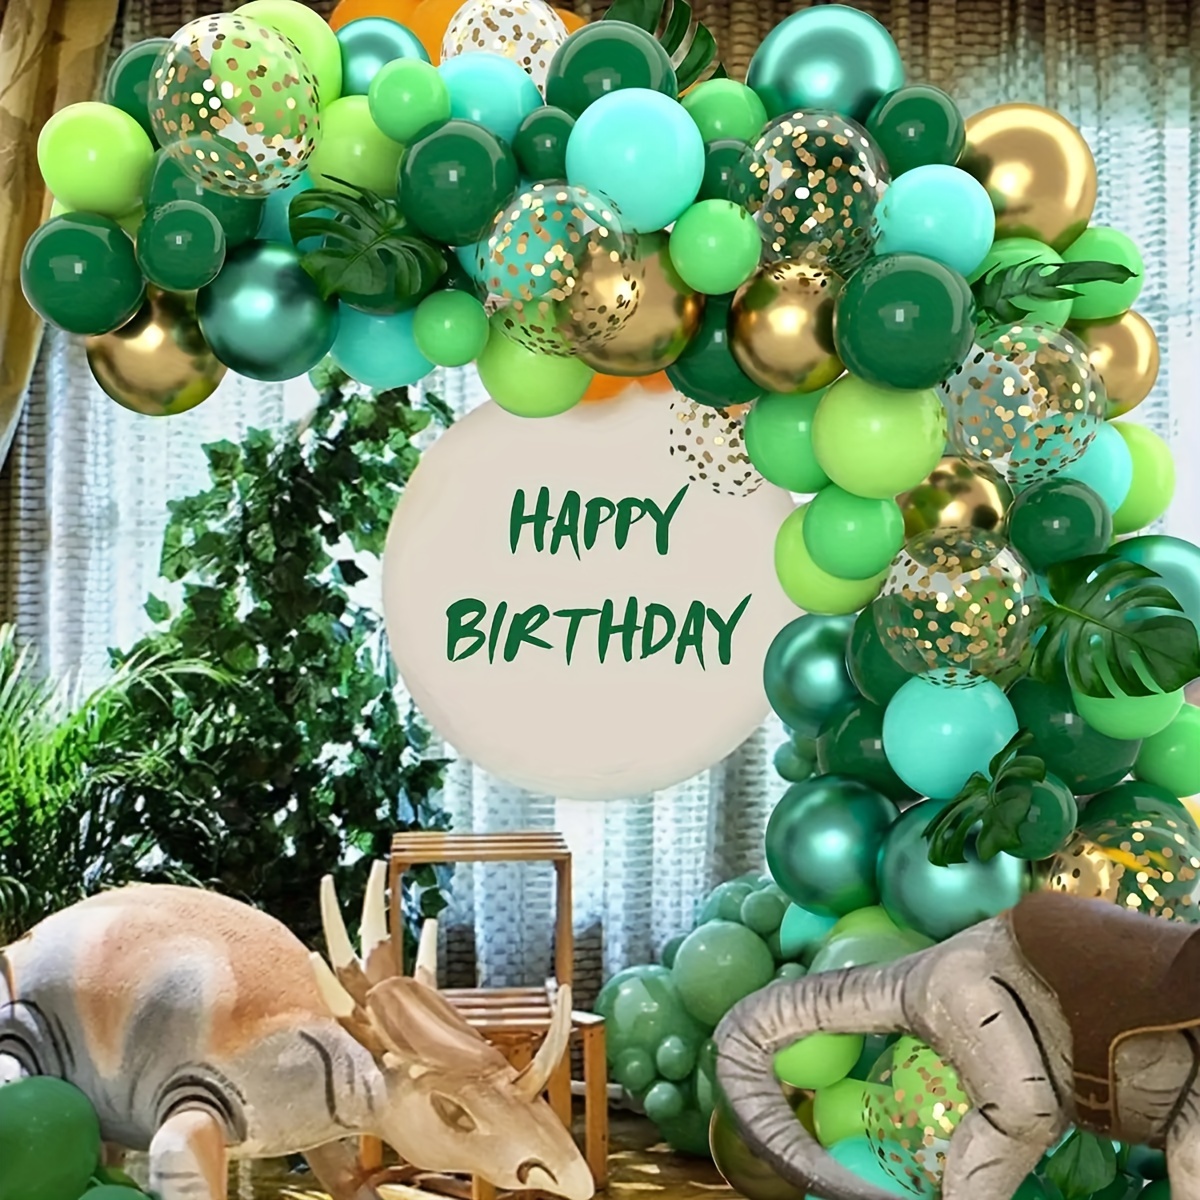  Kit de arco de guirnalda de globos de fiesta de dinosaurios,  globos gigantes de dinosaurio para decoraciones de fiesta de dinosaurios,  kit de arco de globos verdes para decoración de baby